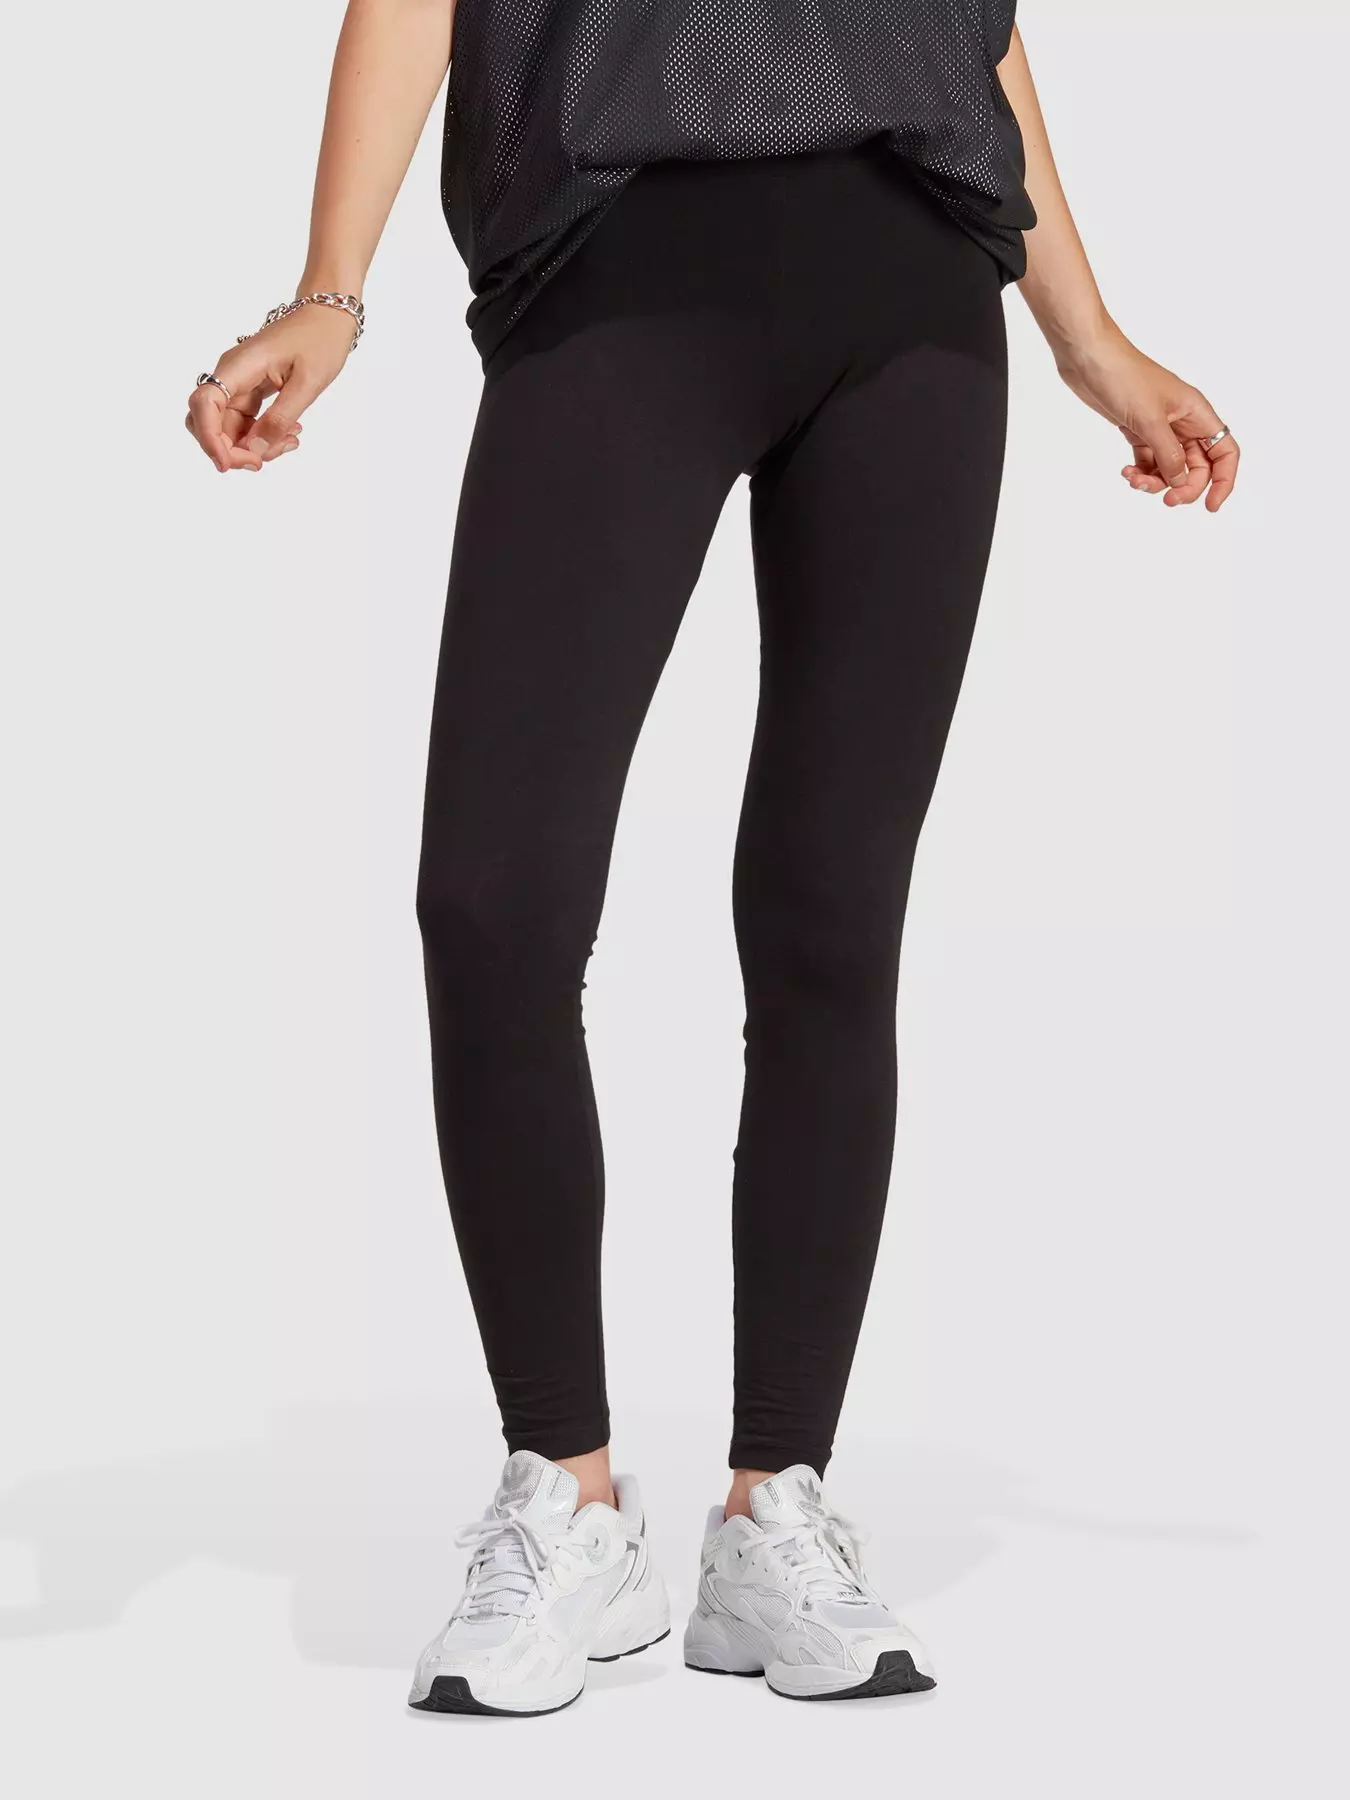 Nike Sportswear Classics High-Waisted 7/8 Leggings - Black